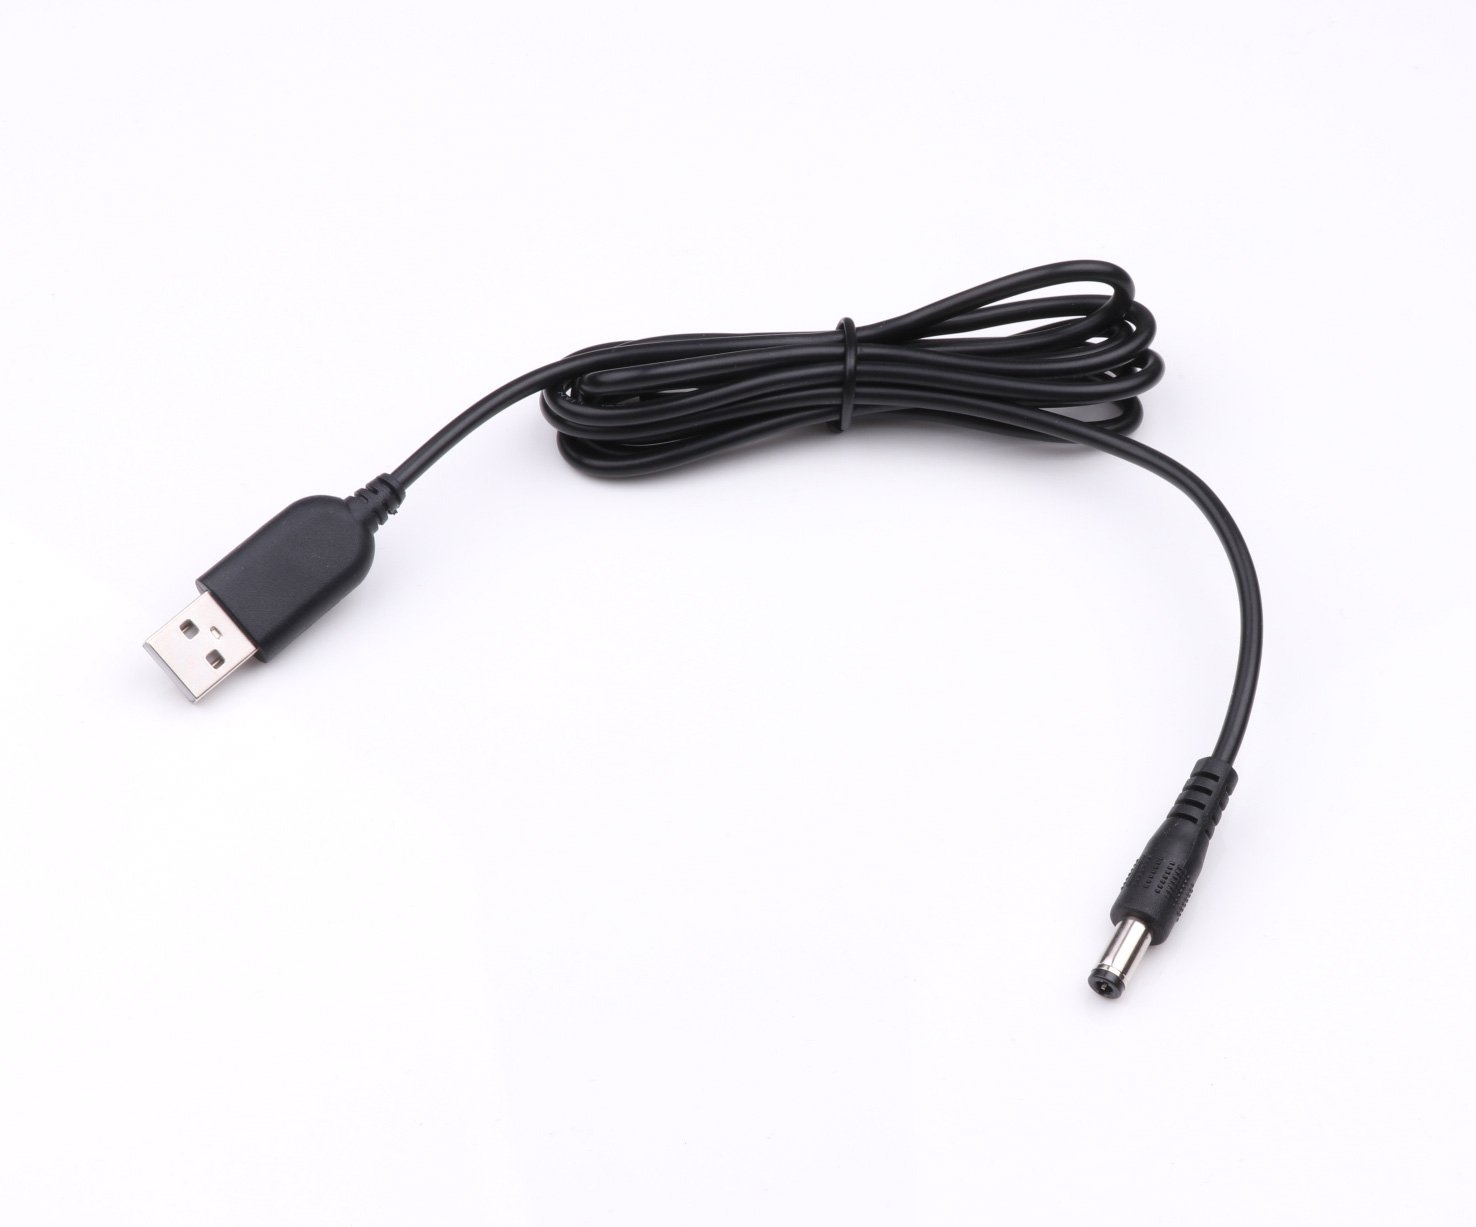 Barrel Jack USB Power Cable – Technologies